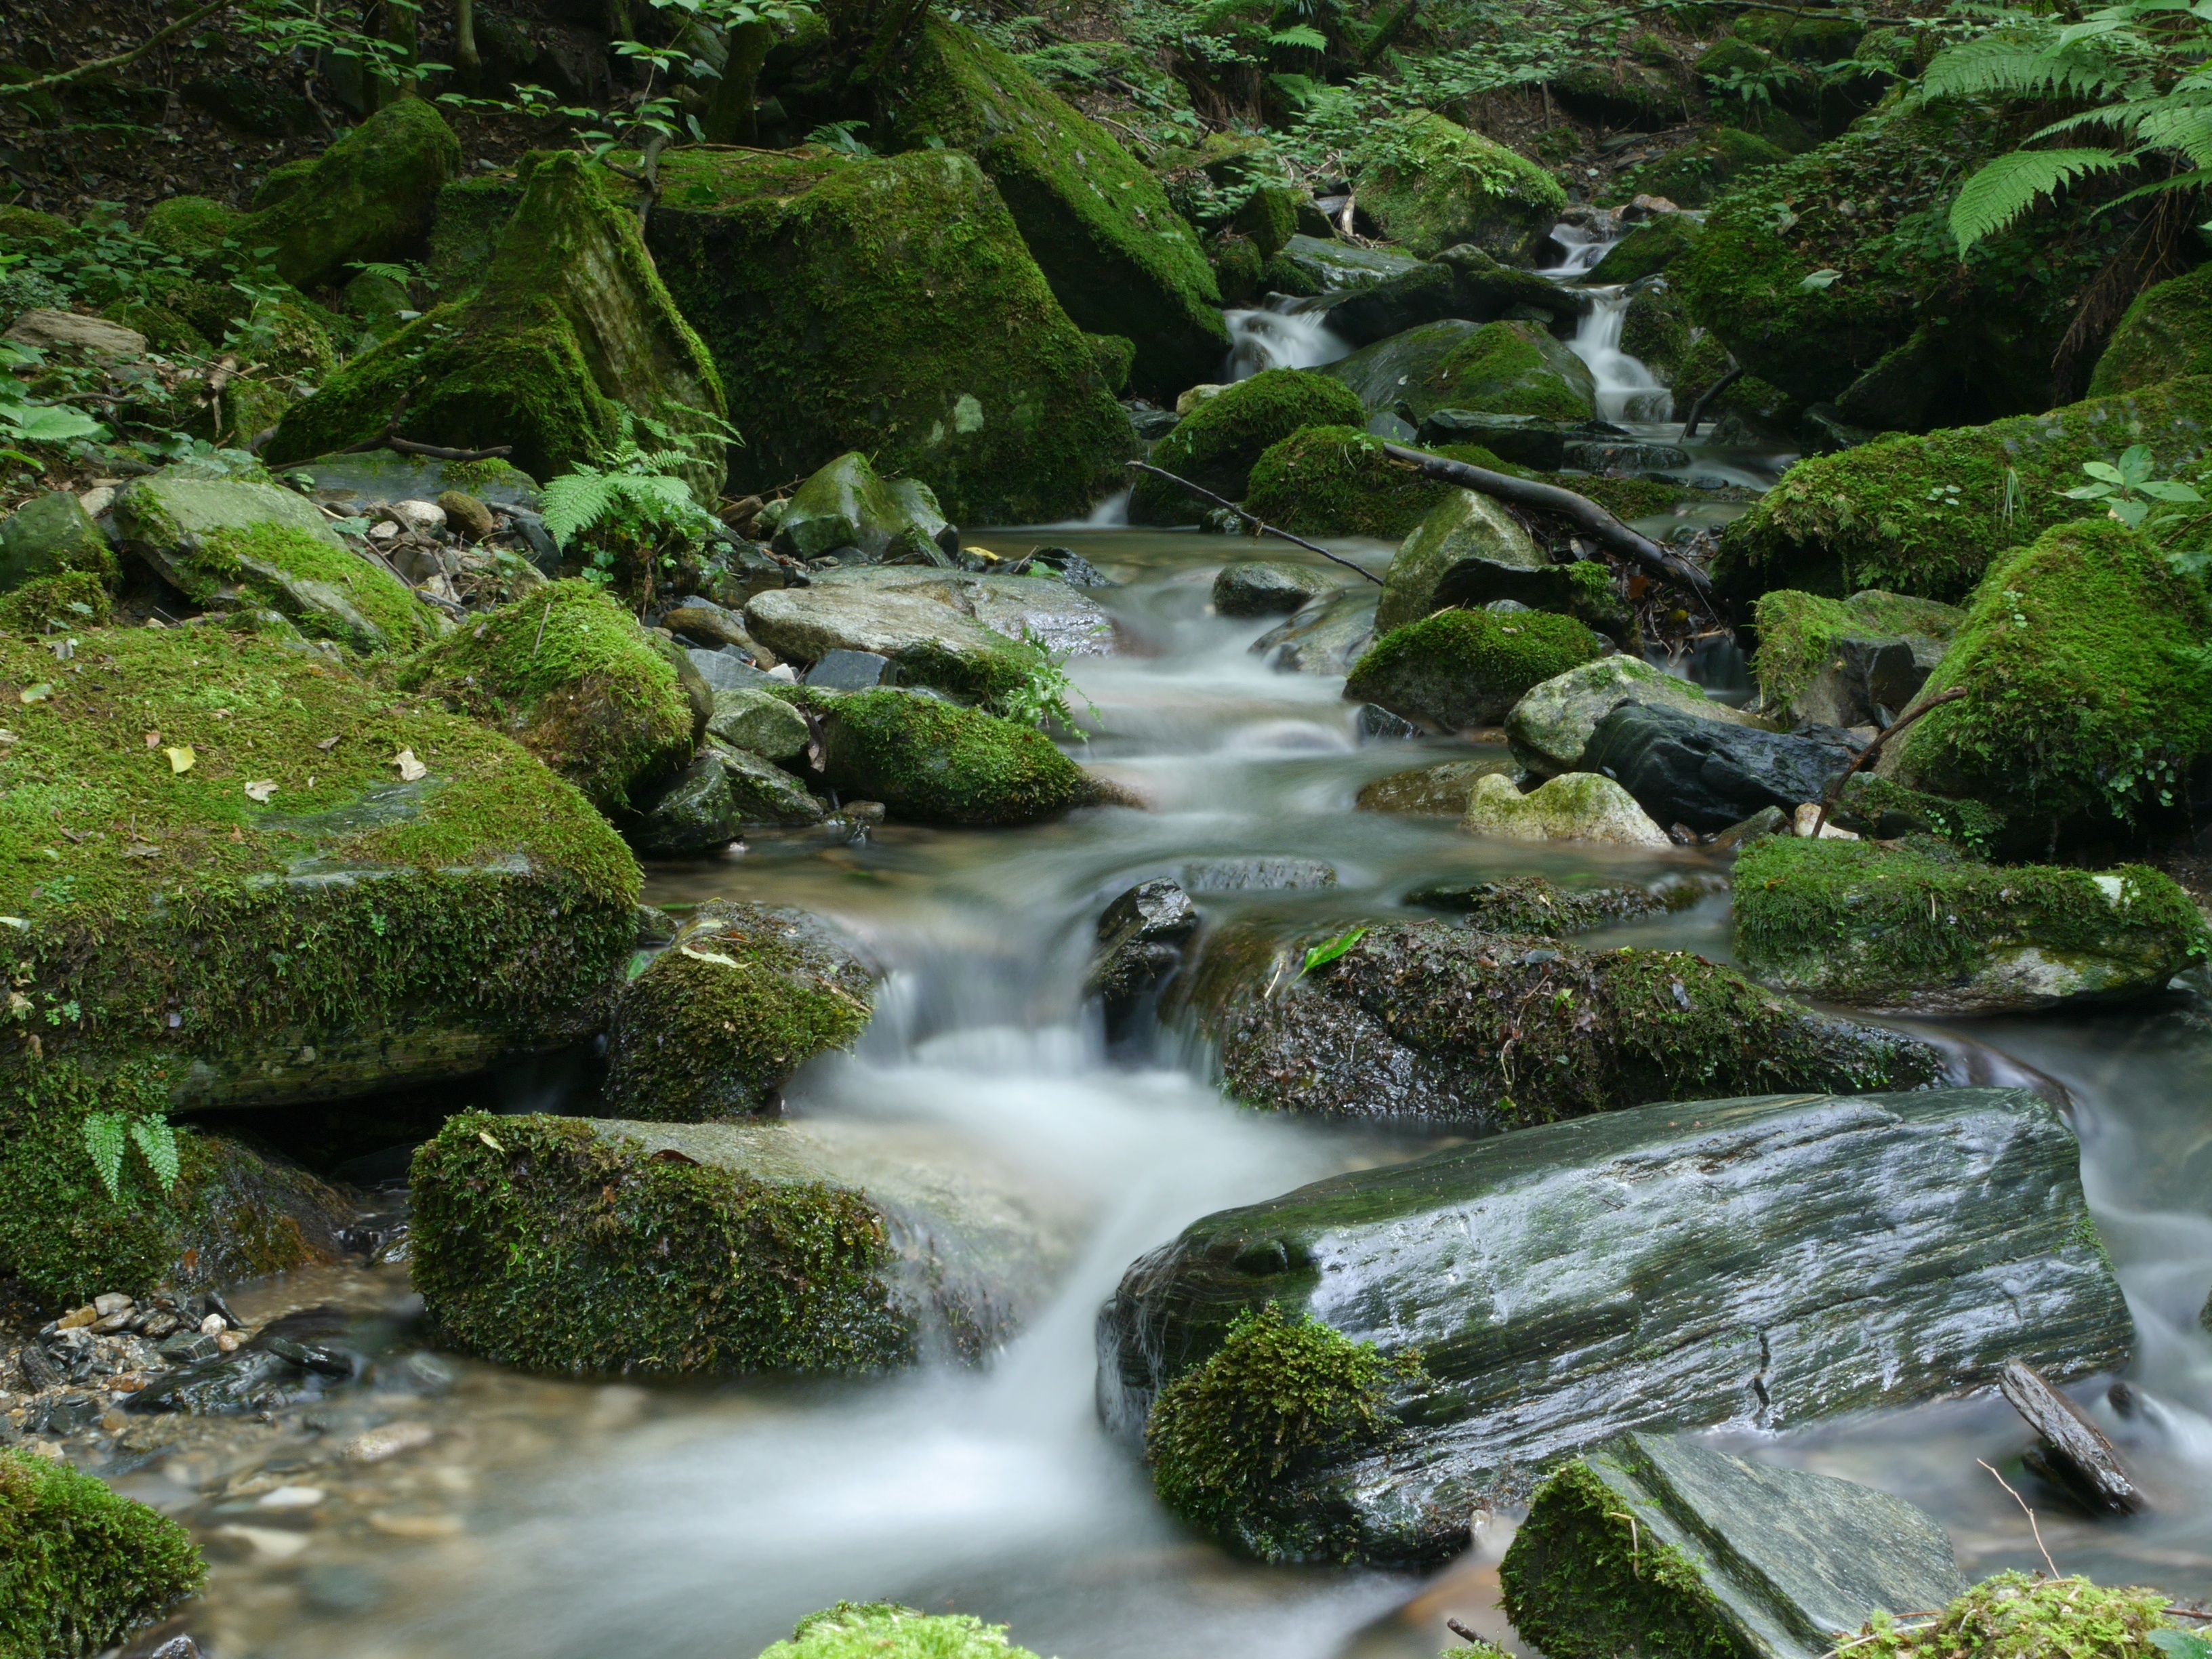 A river among the rocks